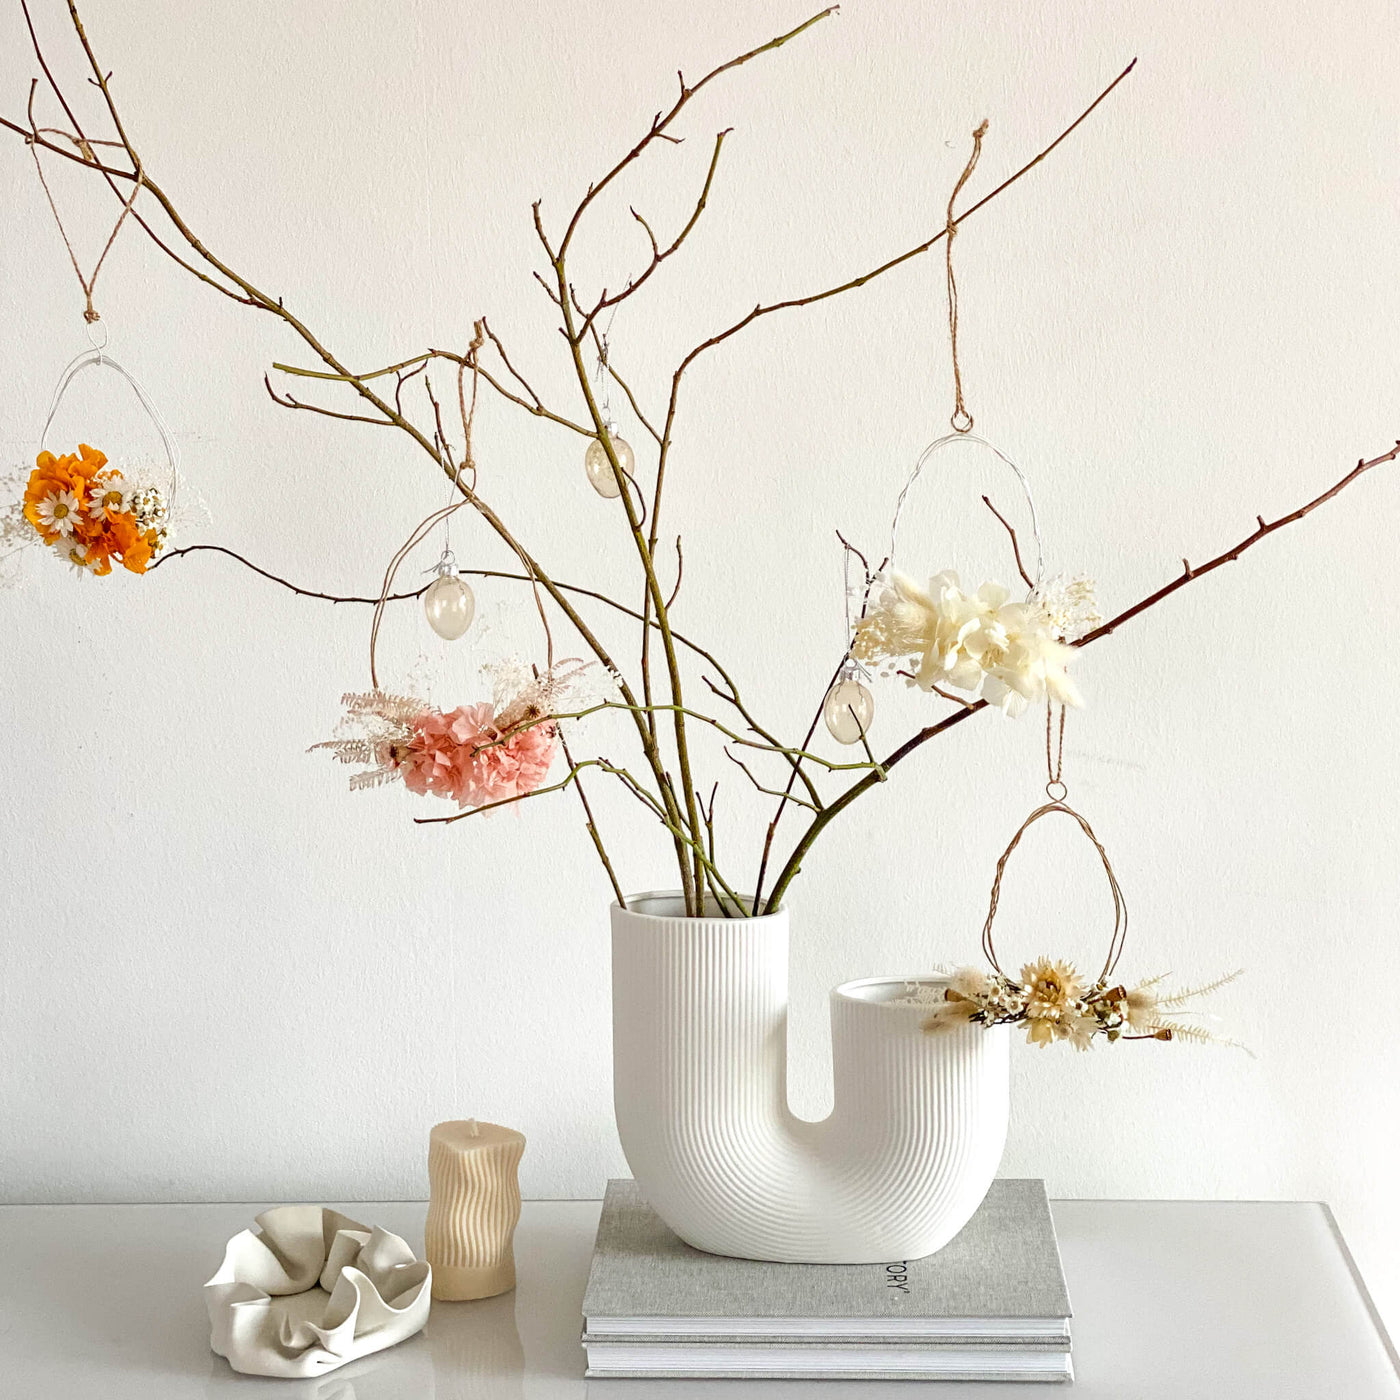 DIY Osteranhänger Trockenblumen | mit Draht | Drahteier basteln - DIY